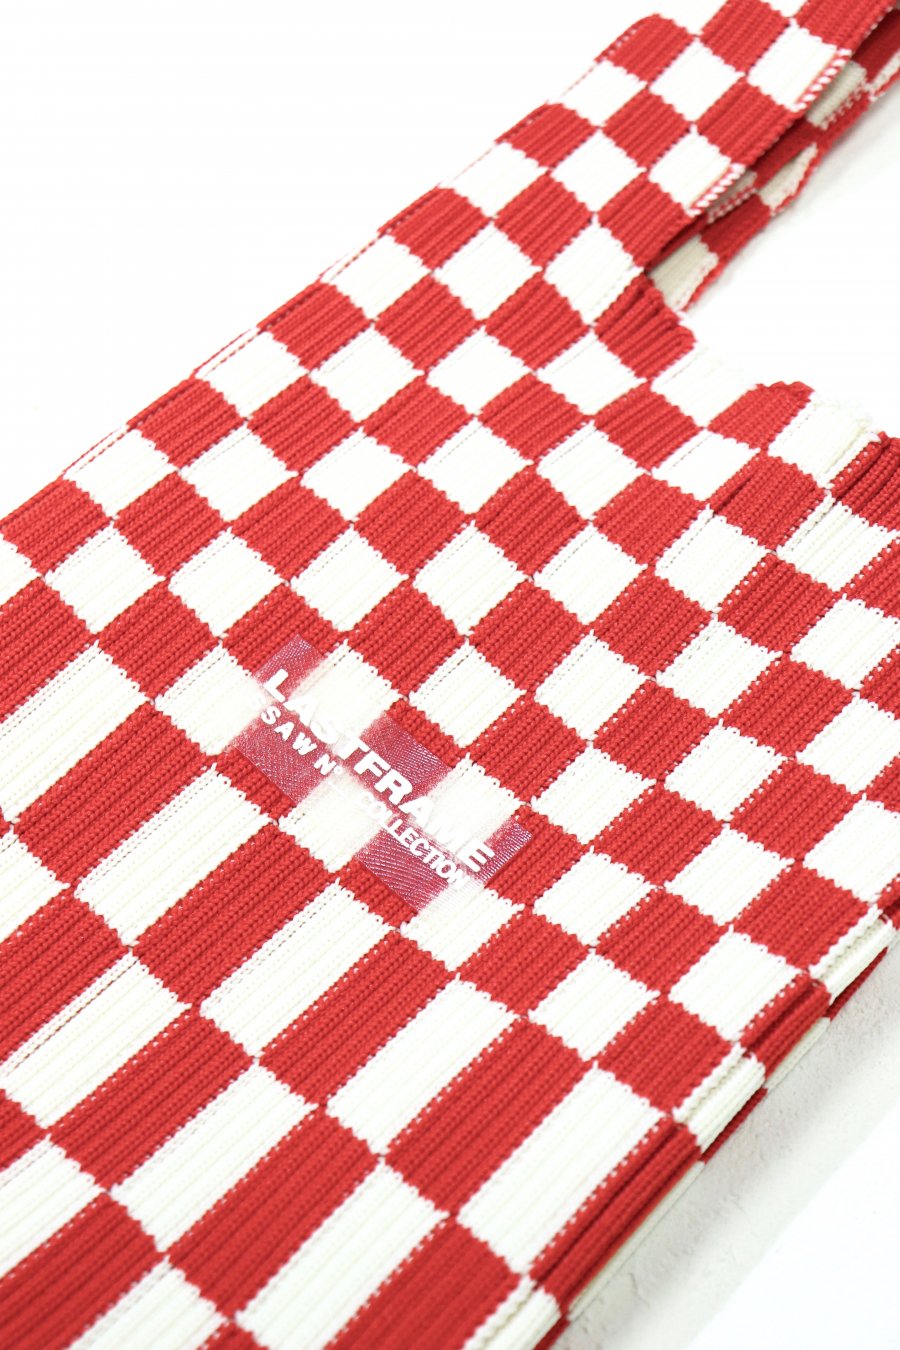 LASTFRAME ICHIMATSU MARKET BAG SMALL（RED × IVORY）